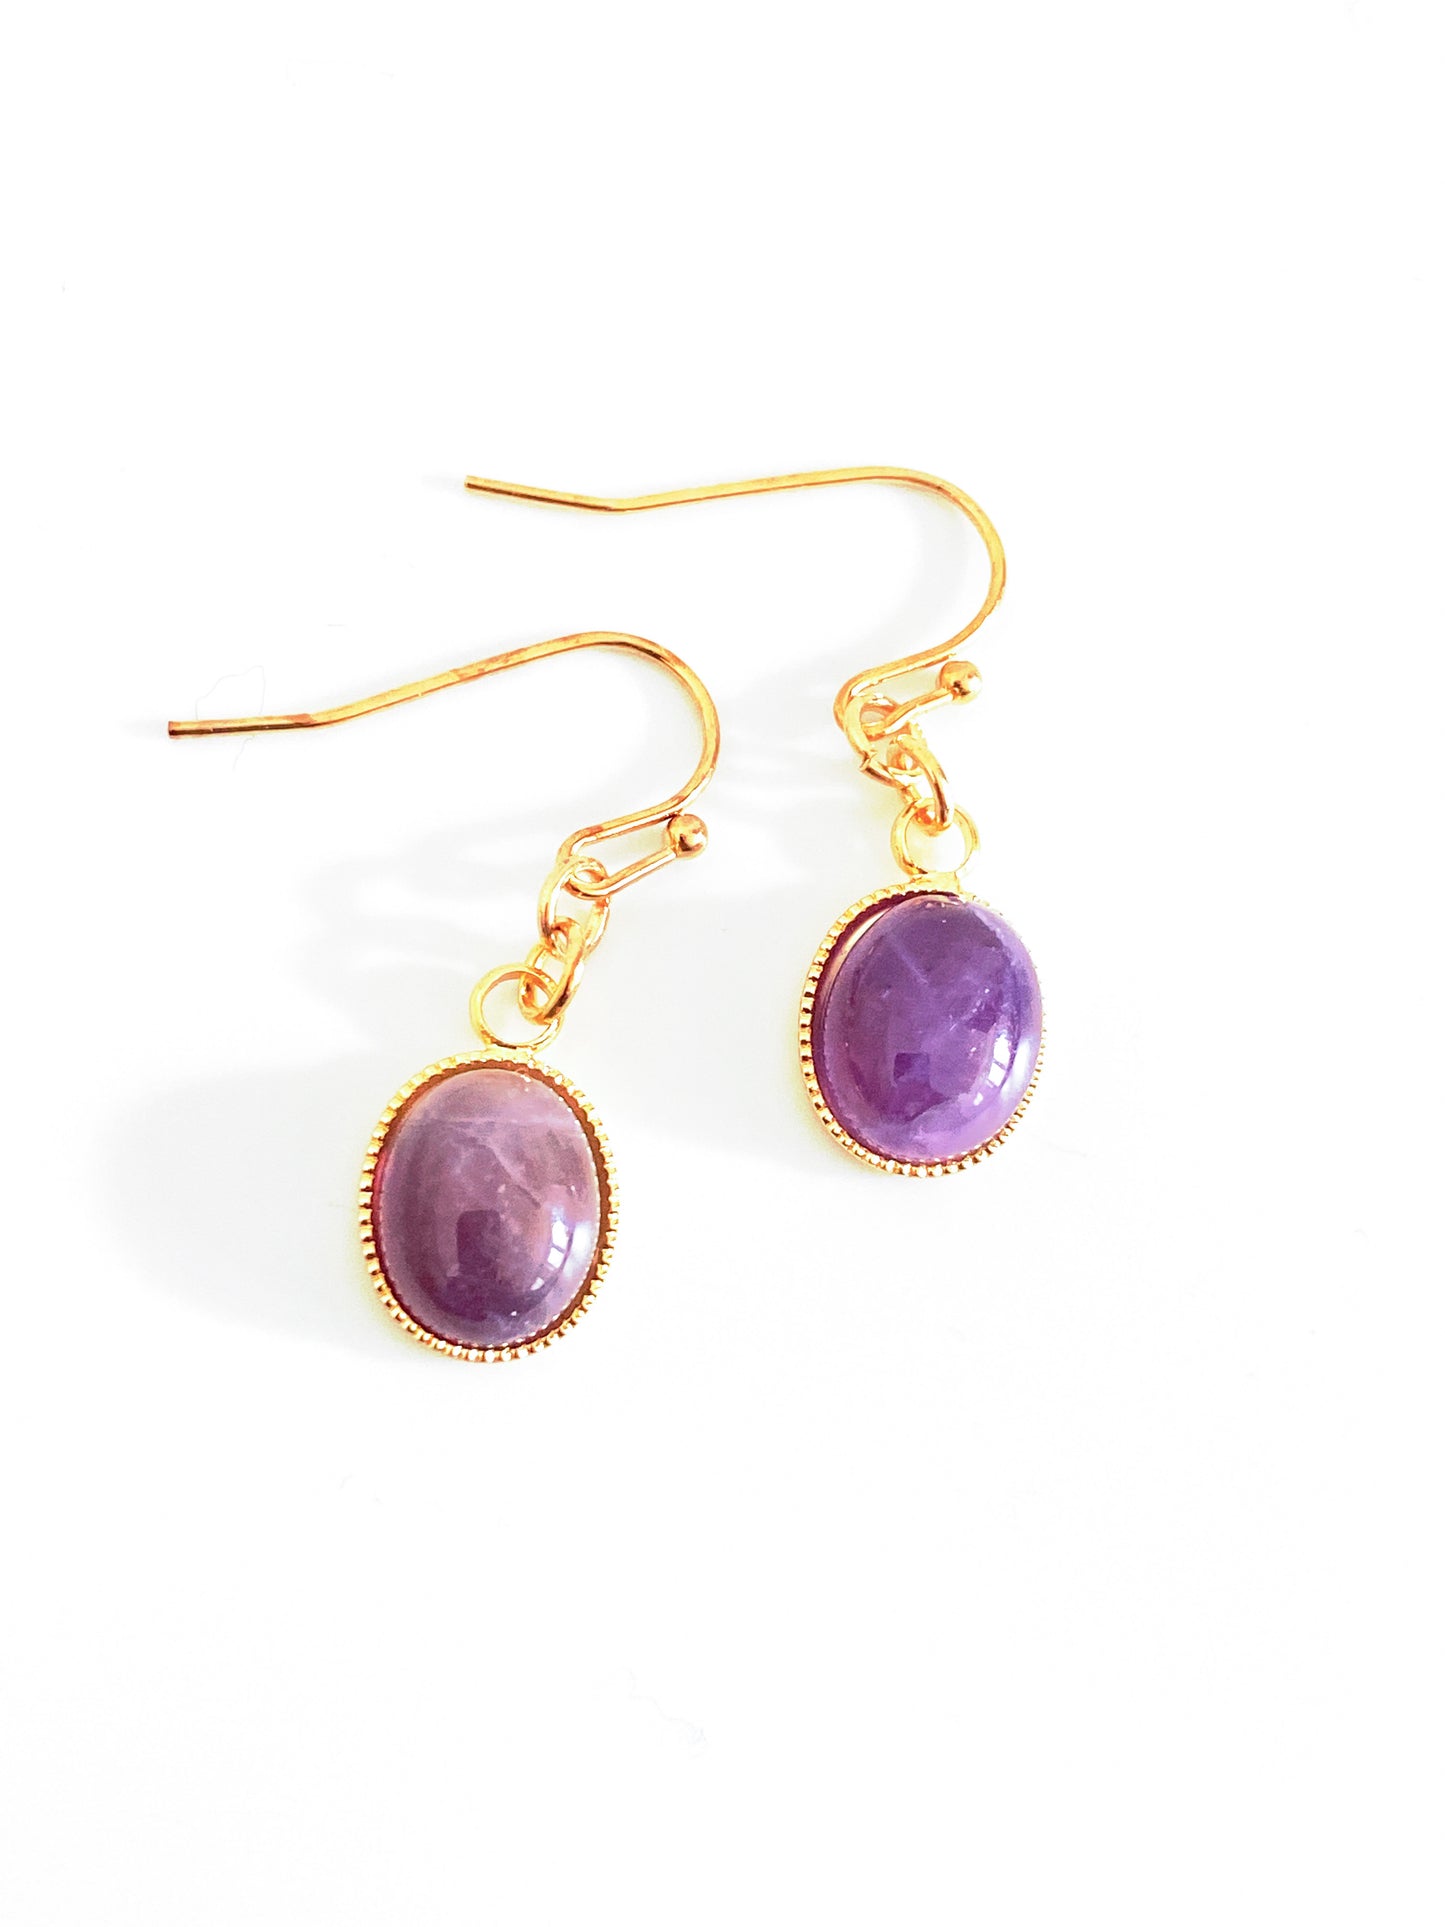 Oval Earrings with semi-precious gemstones